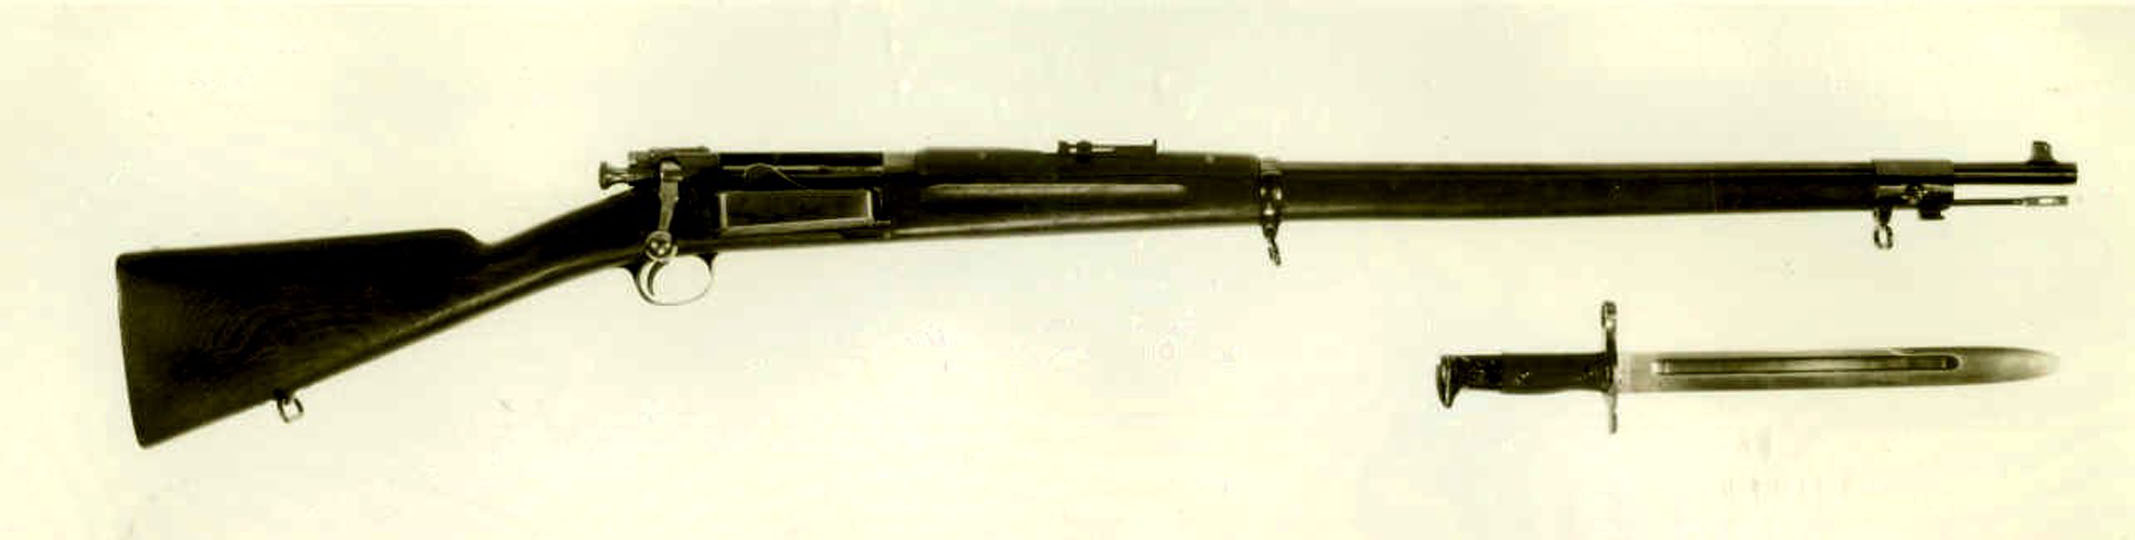 Krag rifle with bayonette